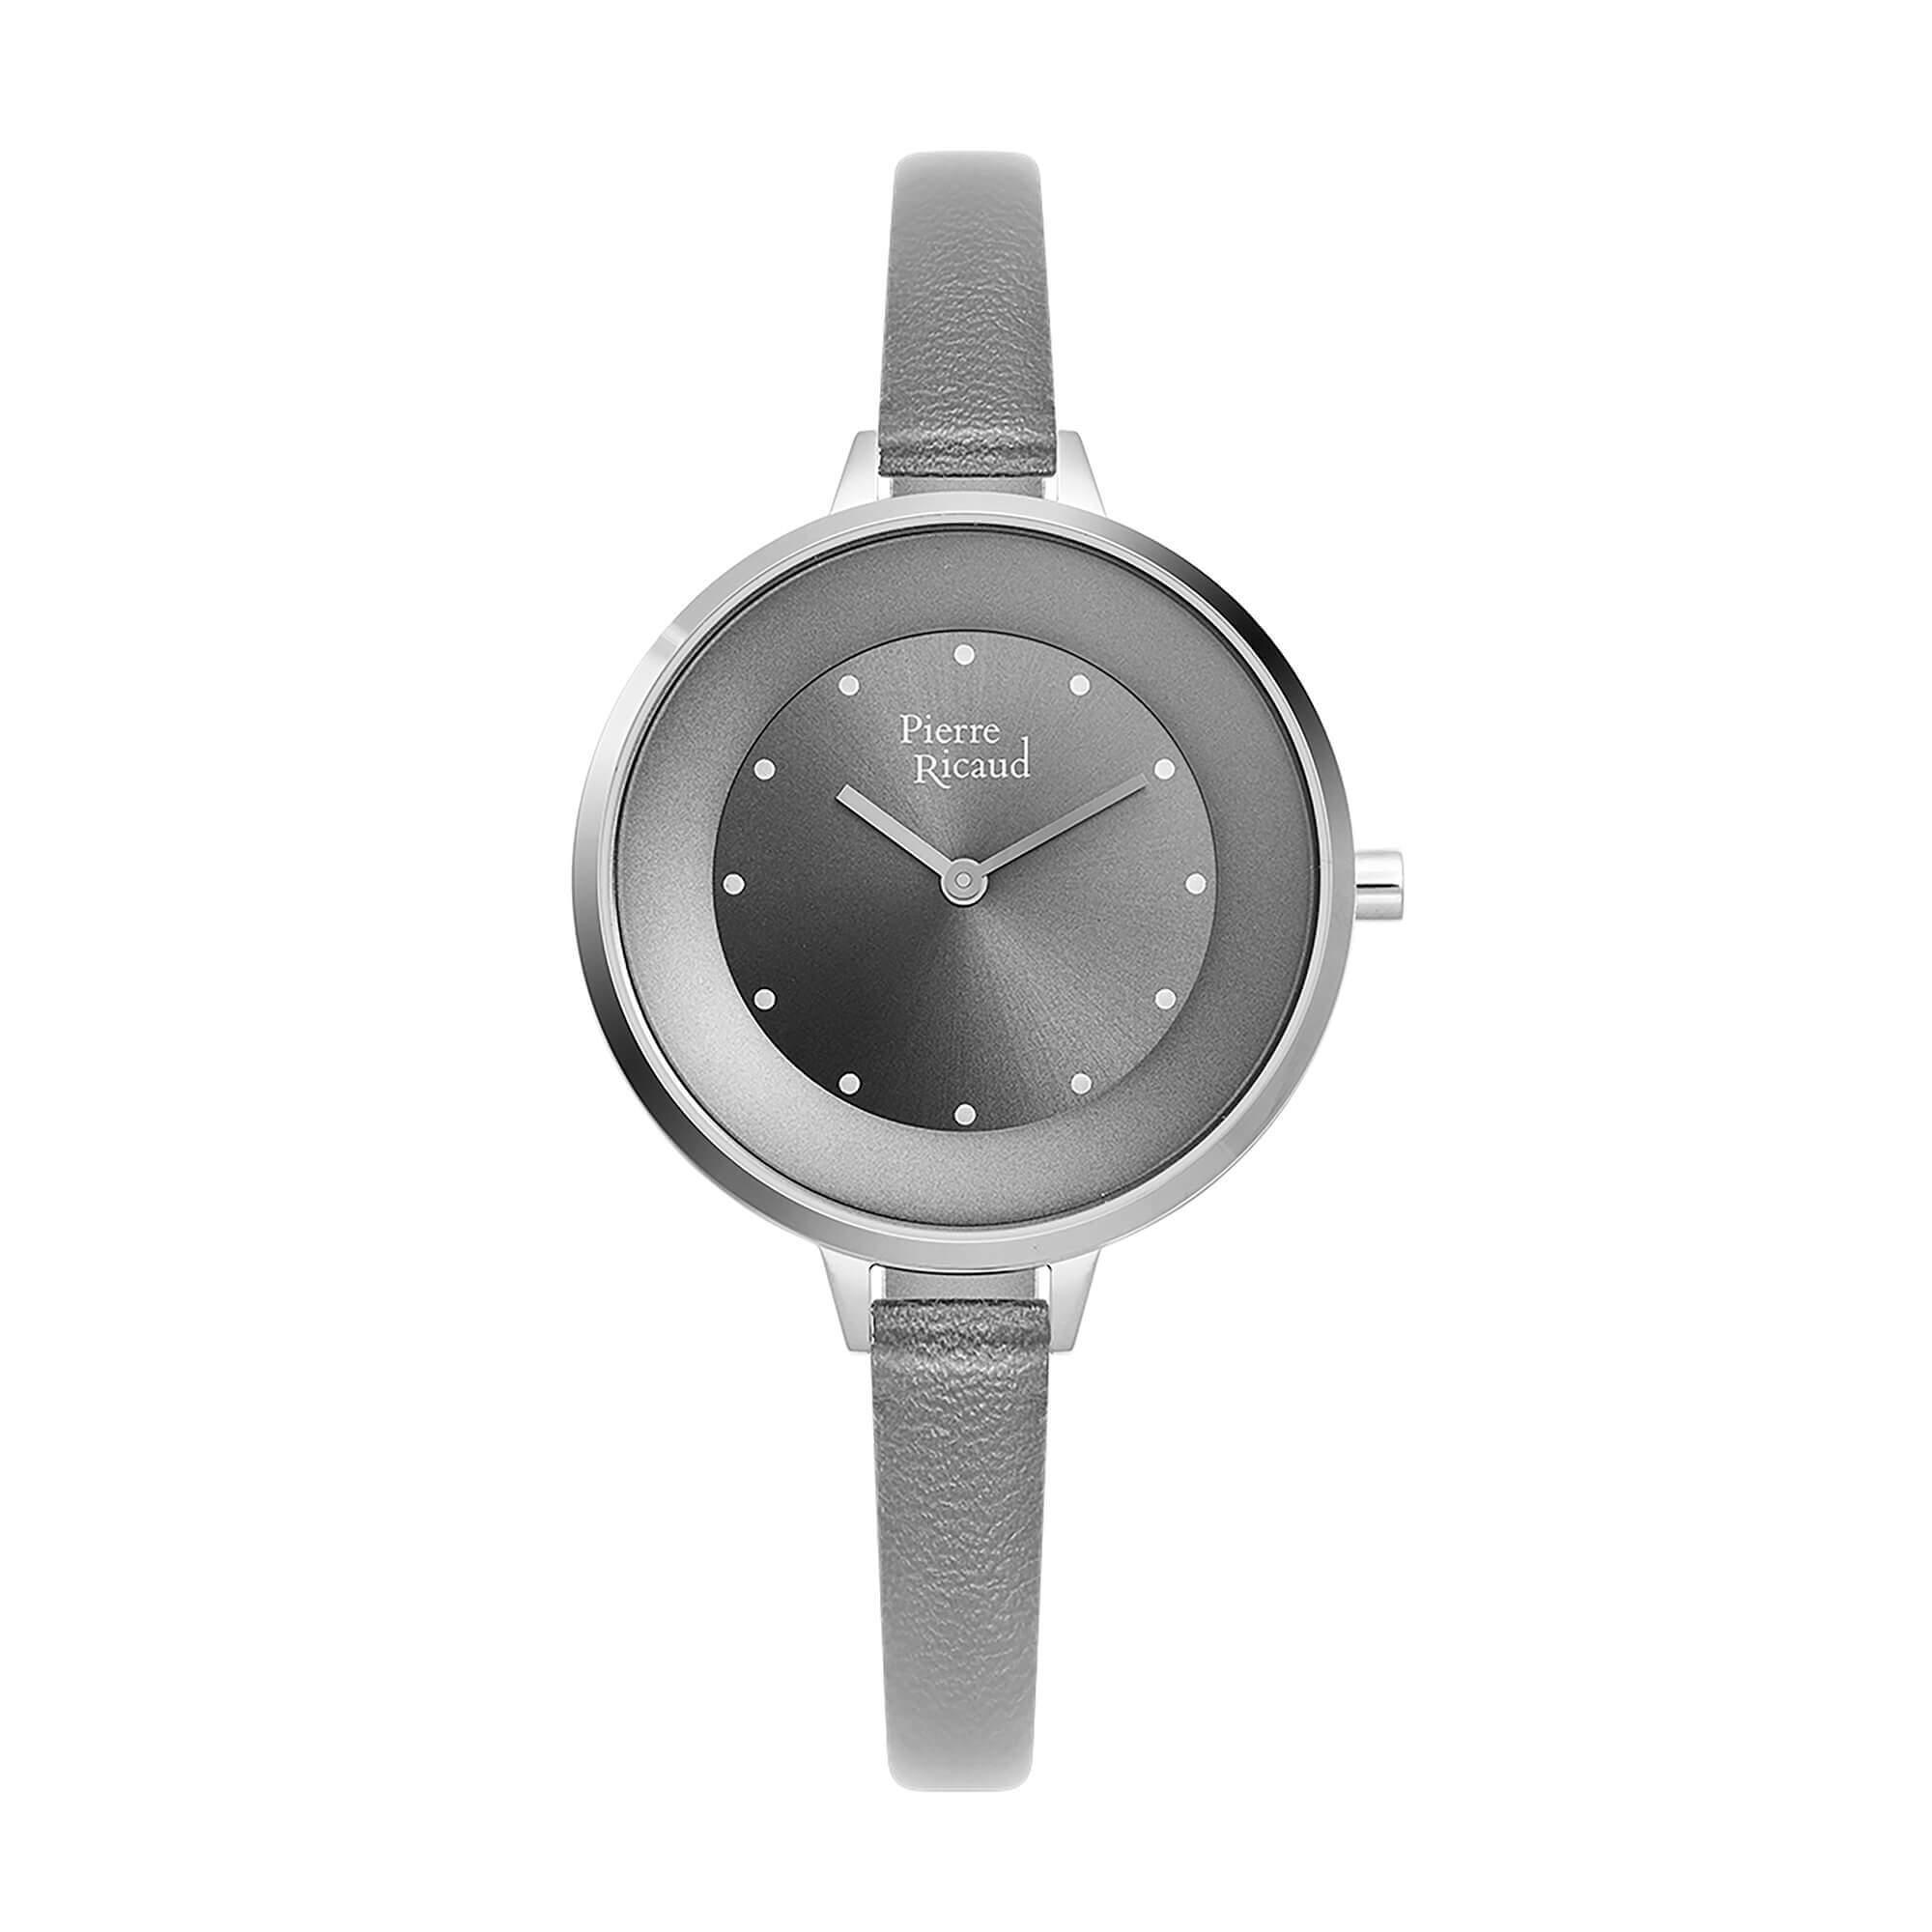 Наручные часы PIERRE RICAUD P22039.5G47Q цена 900 ₽. Эксклюзивный  дистрибьютор компания Skytime